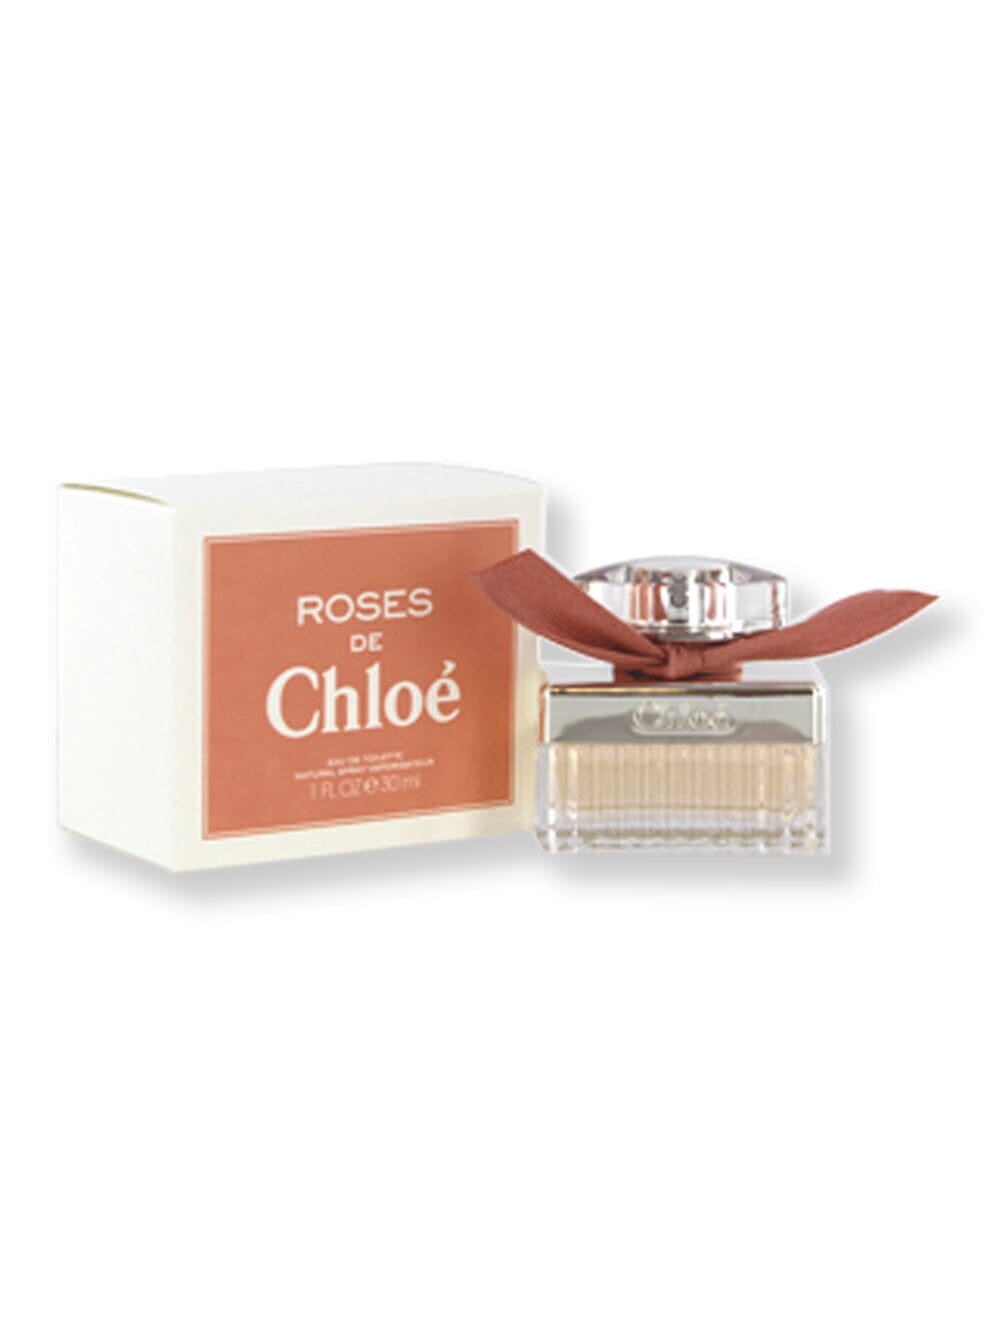 Chloe Chloe Roses De Chloe EDT Spray 1 oz30 ml Perfume 